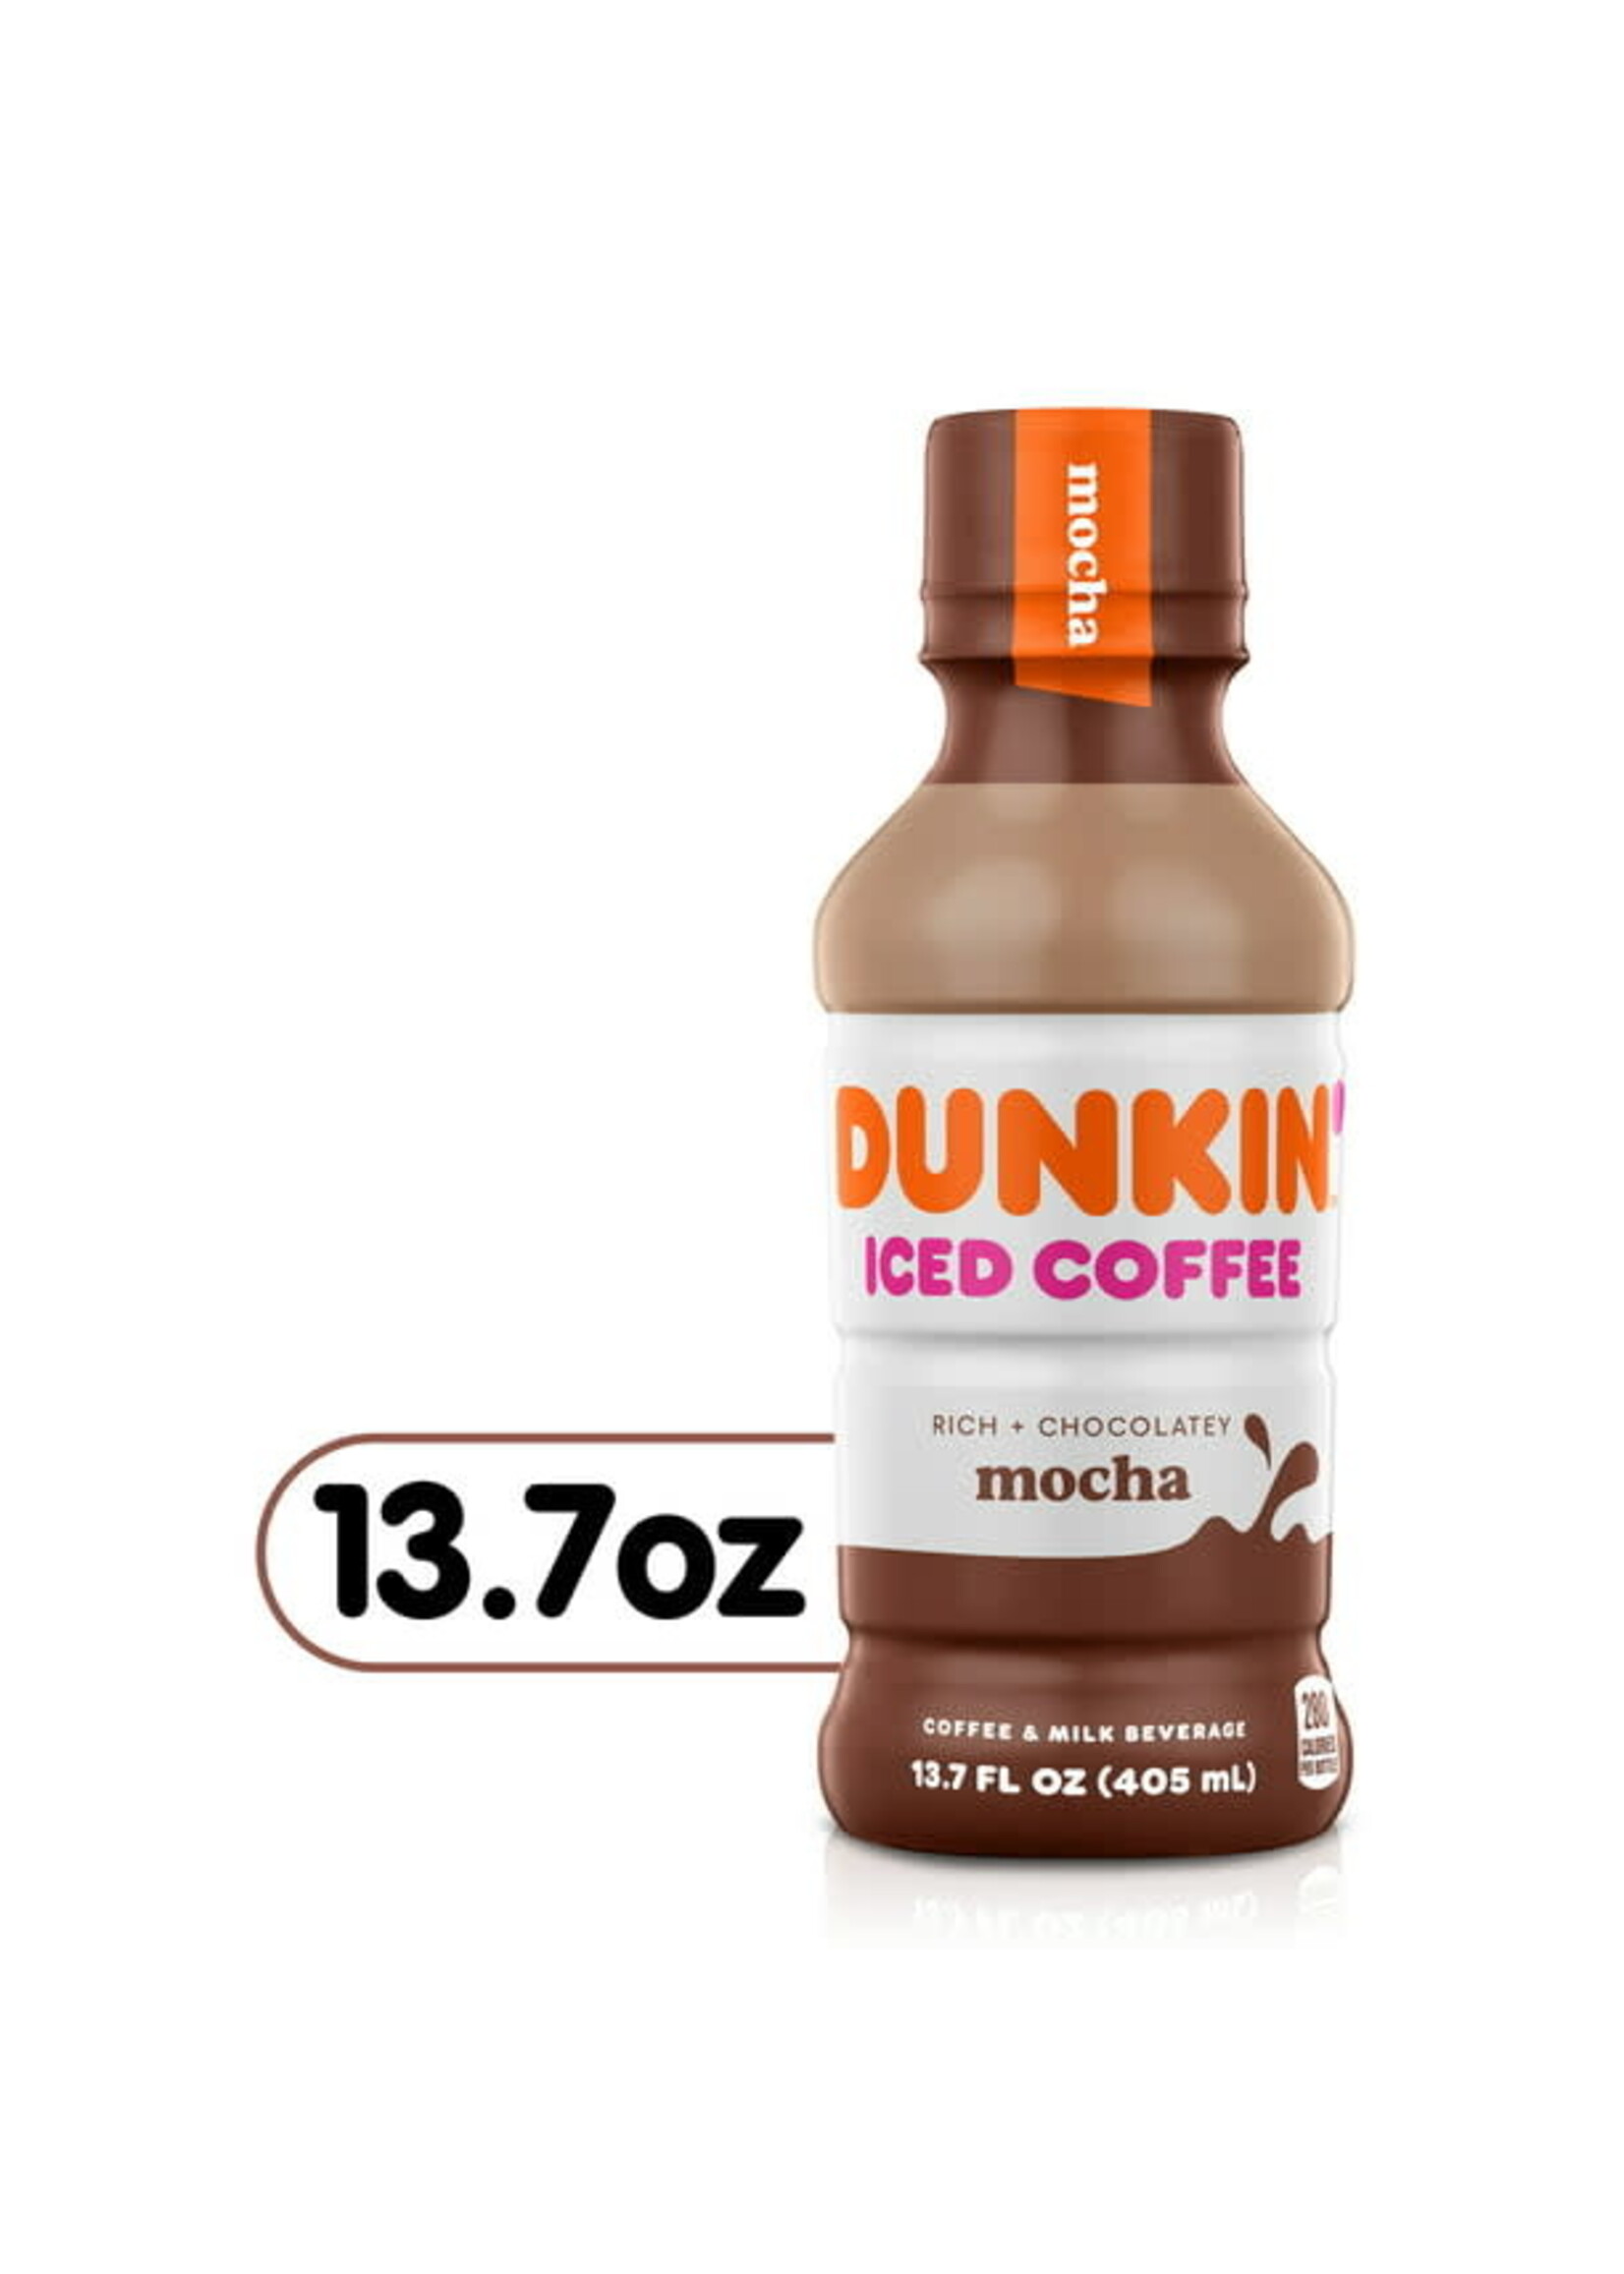 Dunkin’ Iced Coffee Mocha 13.7oz